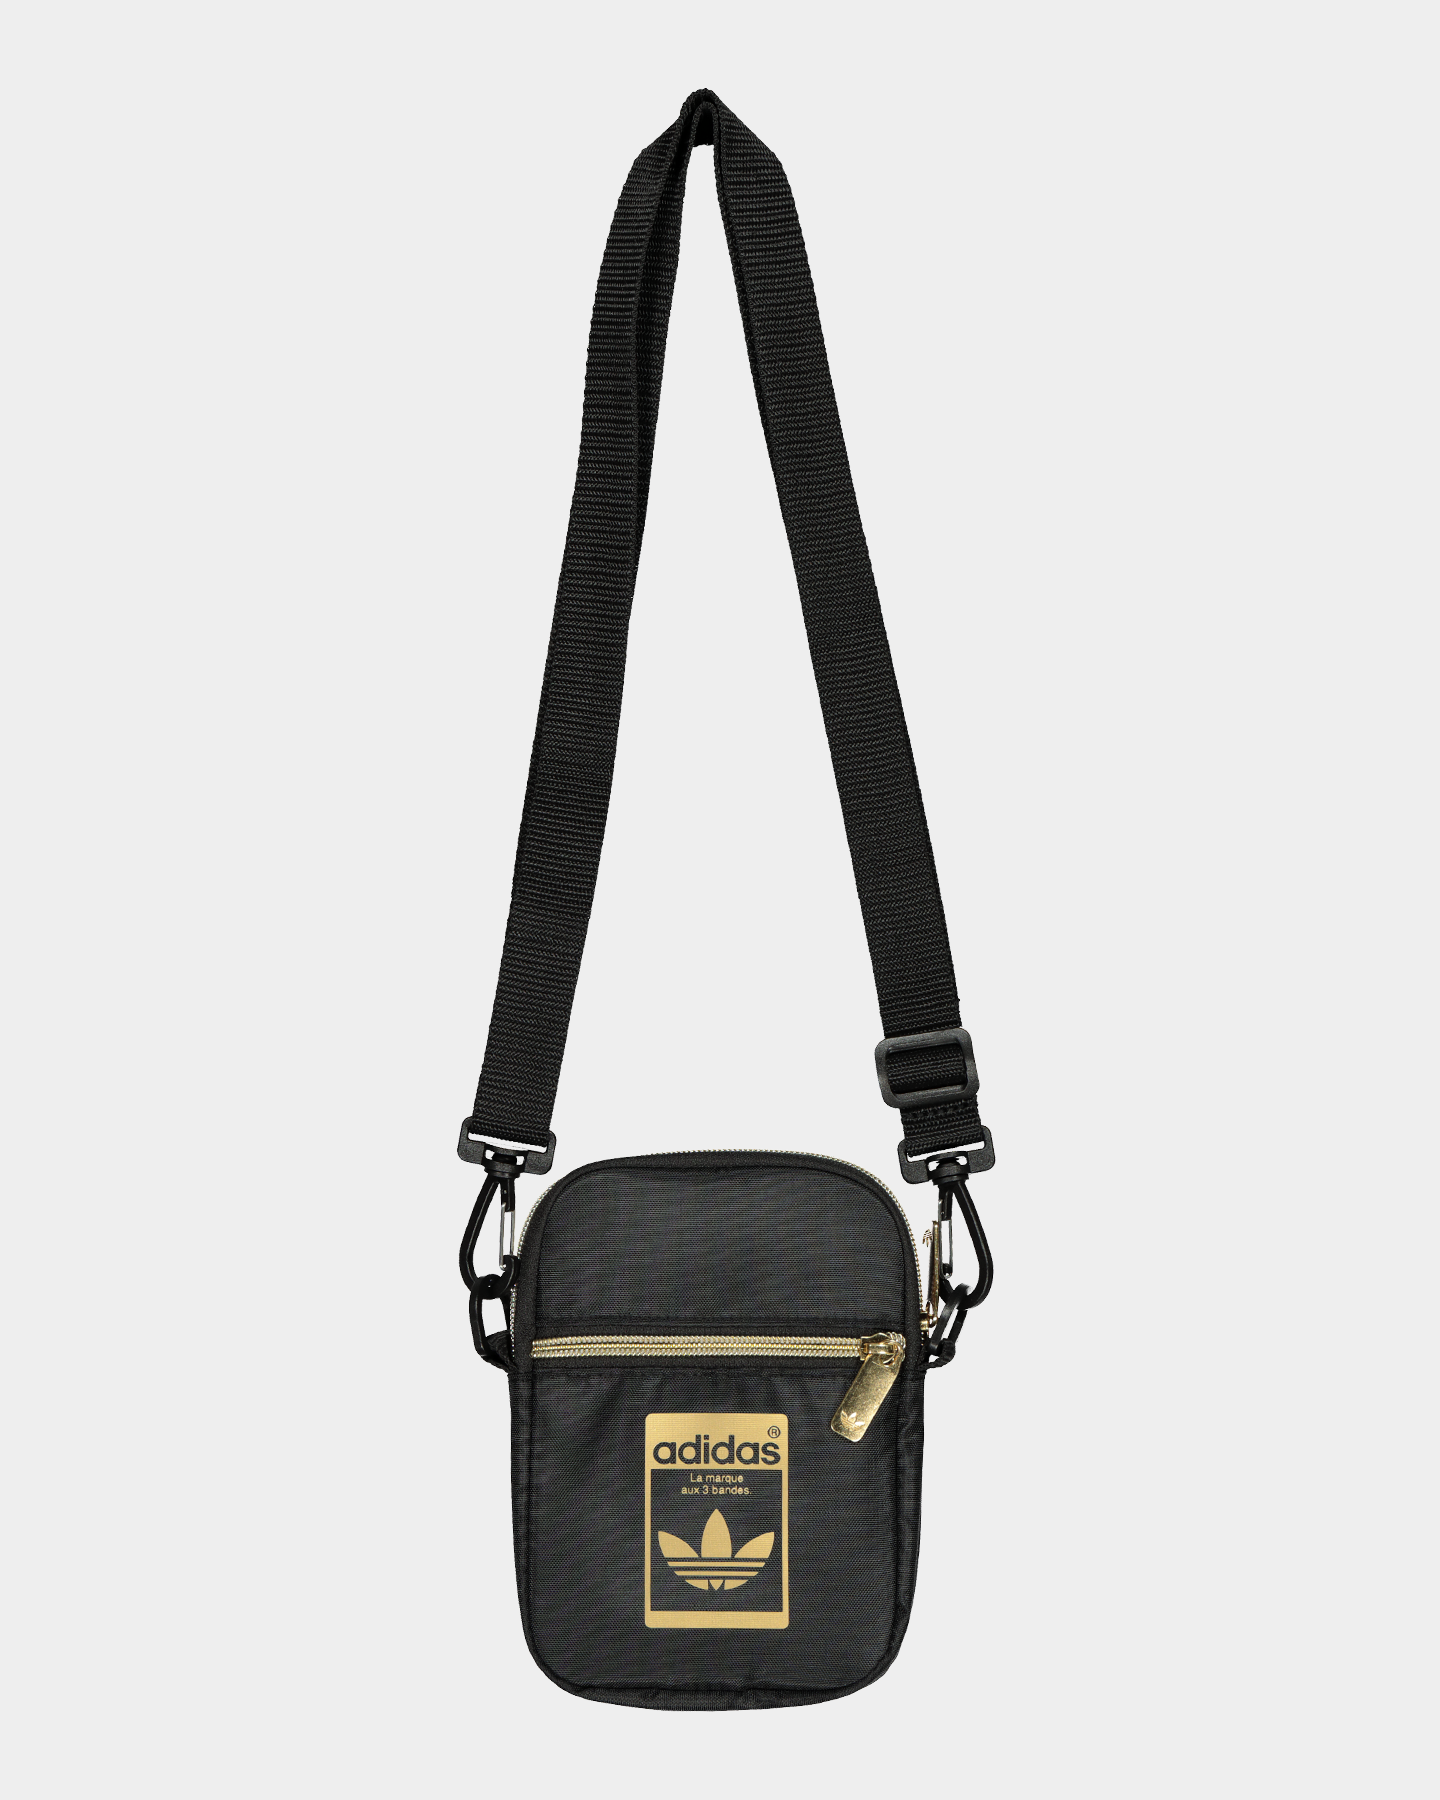 adidas messenger bag black gold